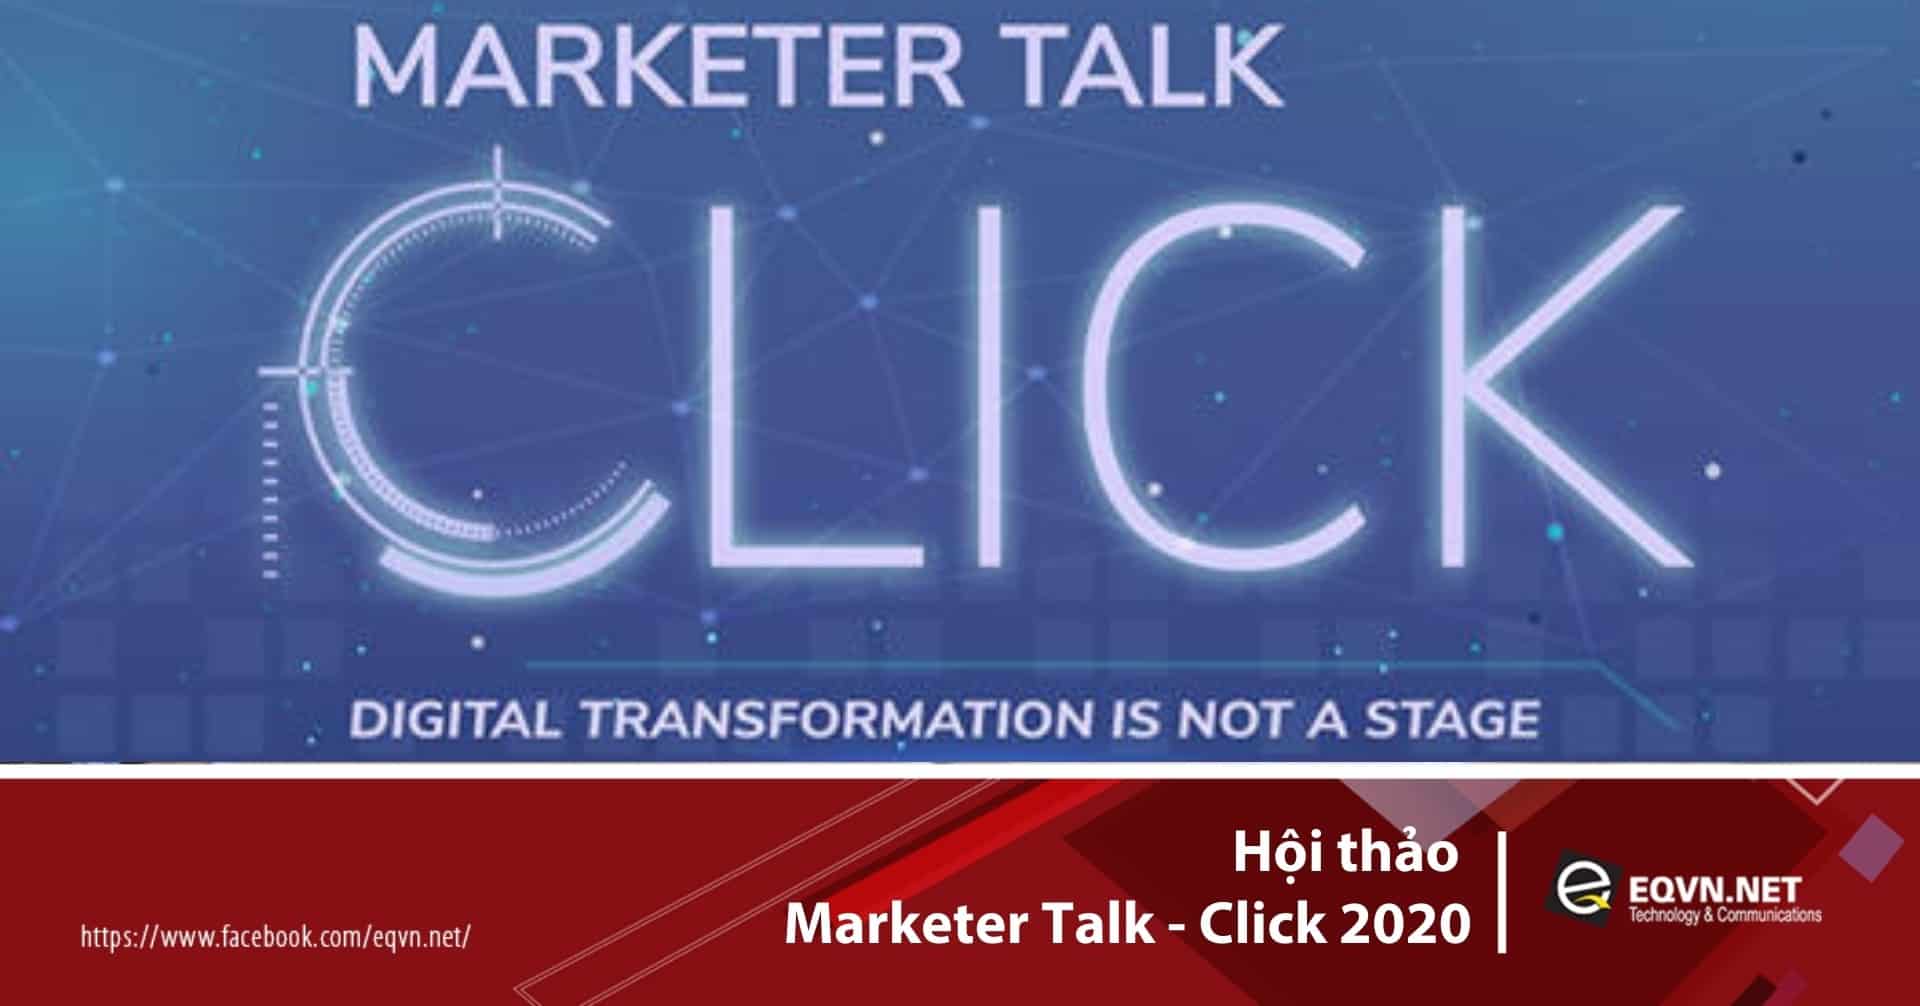 Hội thảo marketer talk 2020 click